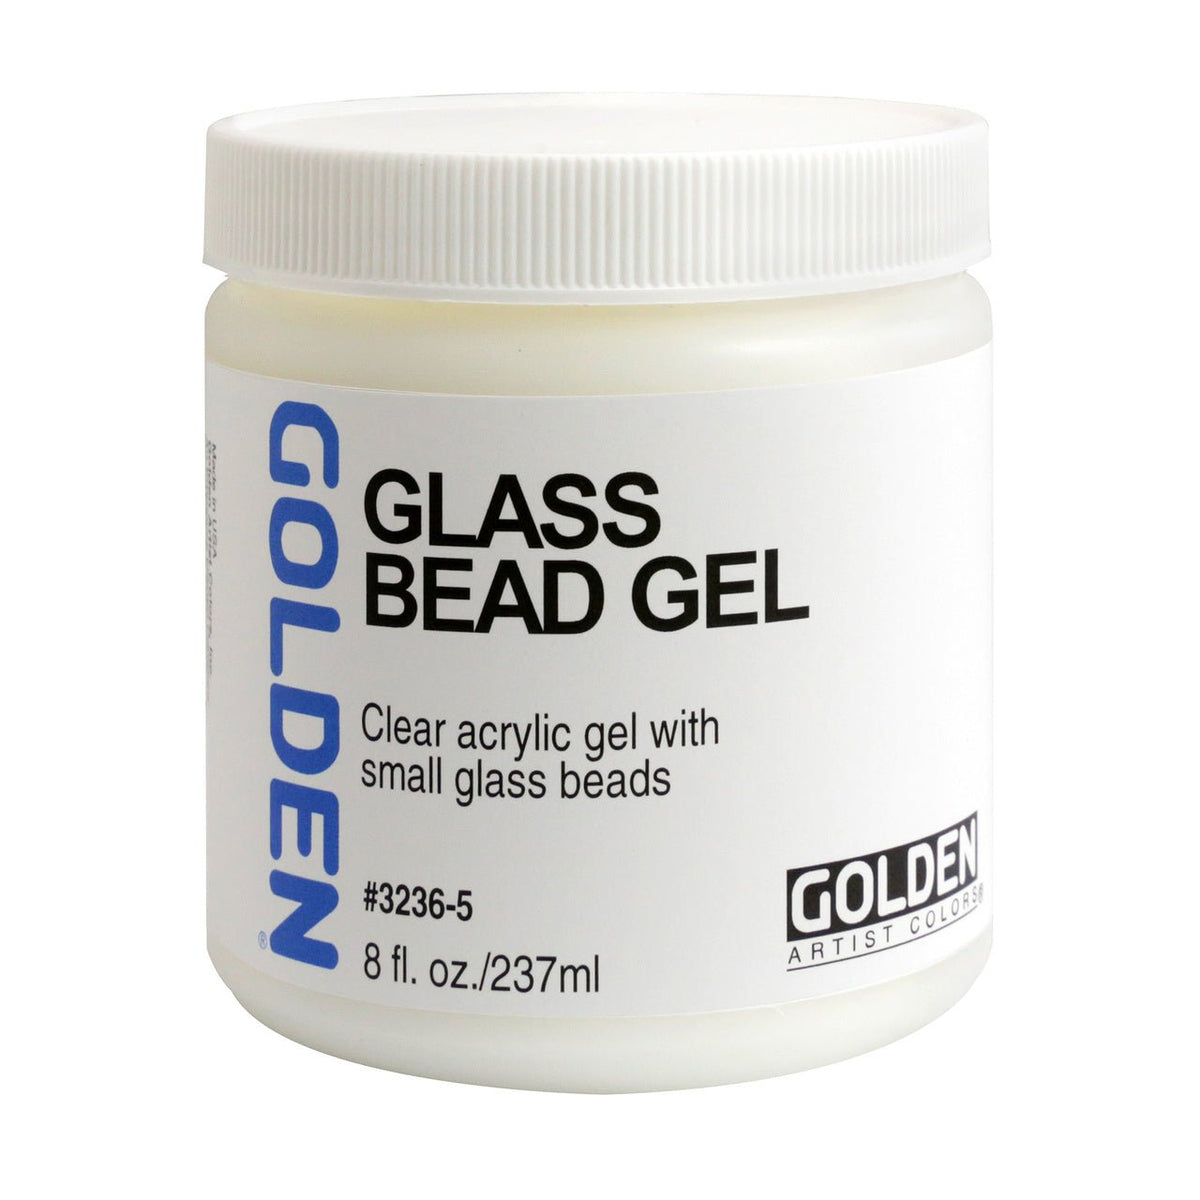 Golden Glass Bead Gel 8 oz - merriartist.com